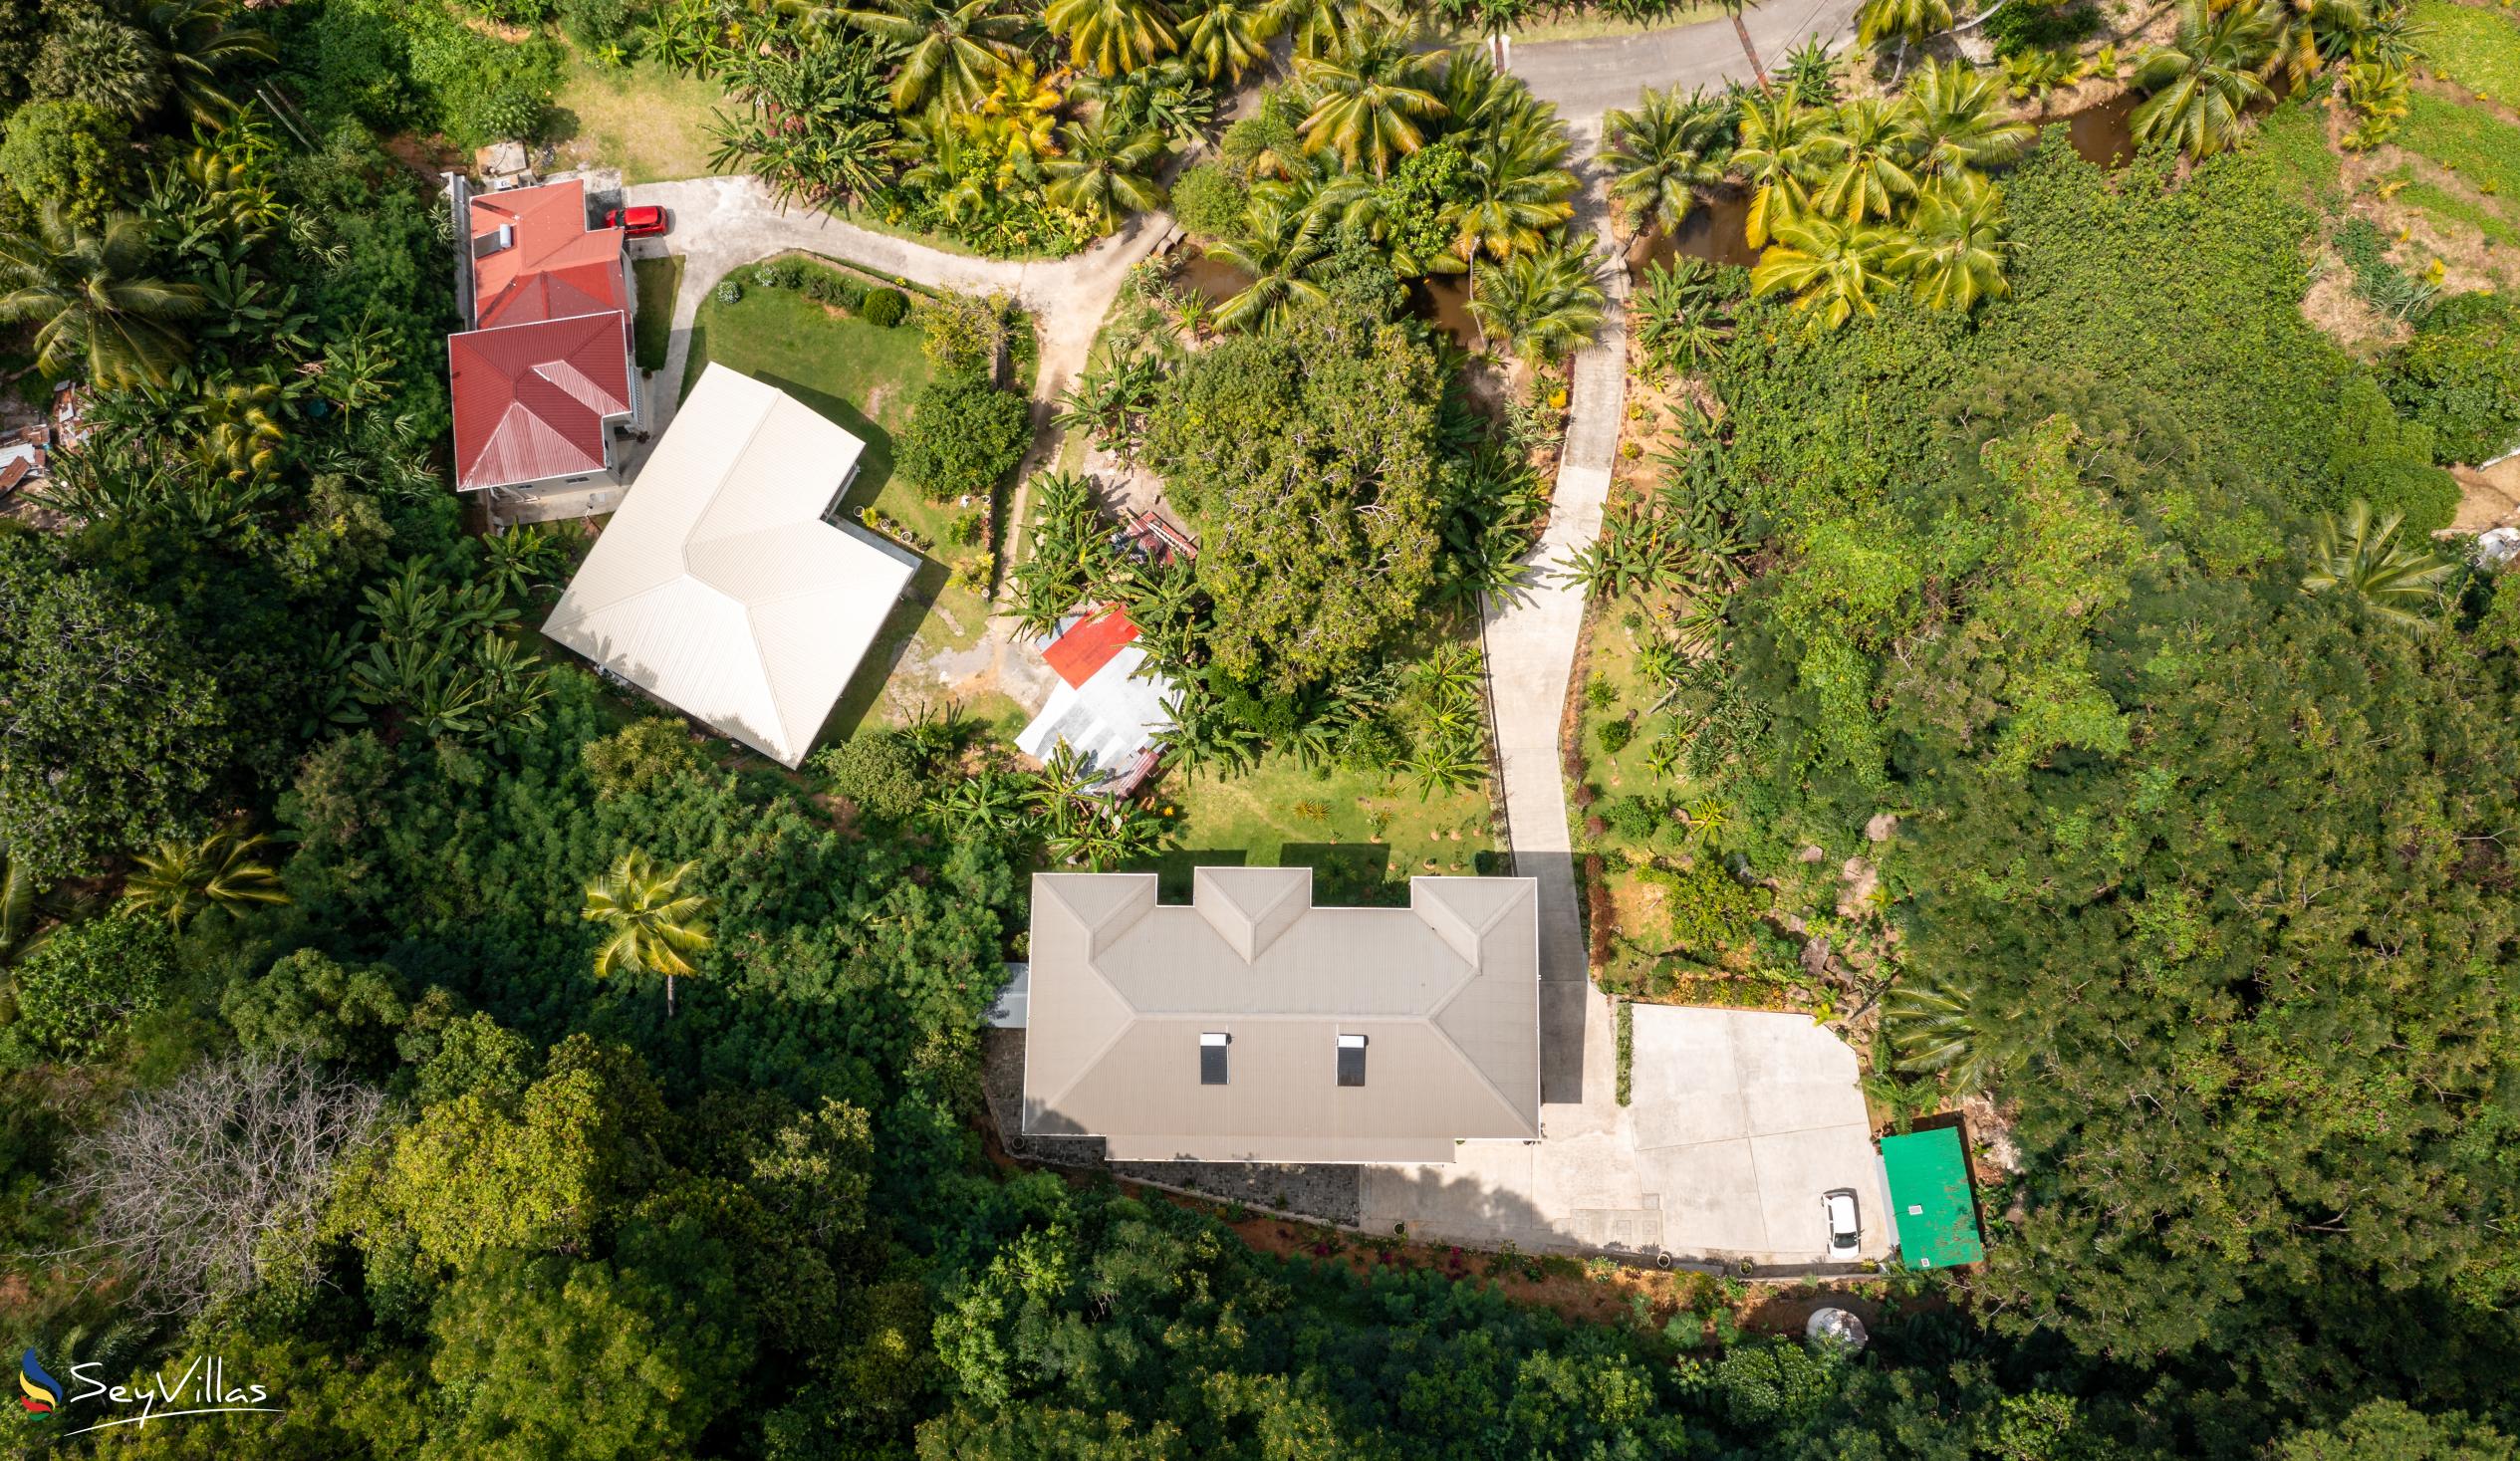 Photo 45: Kanasuk Self Catering Apartments - Outdoor area - Mahé (Seychelles)